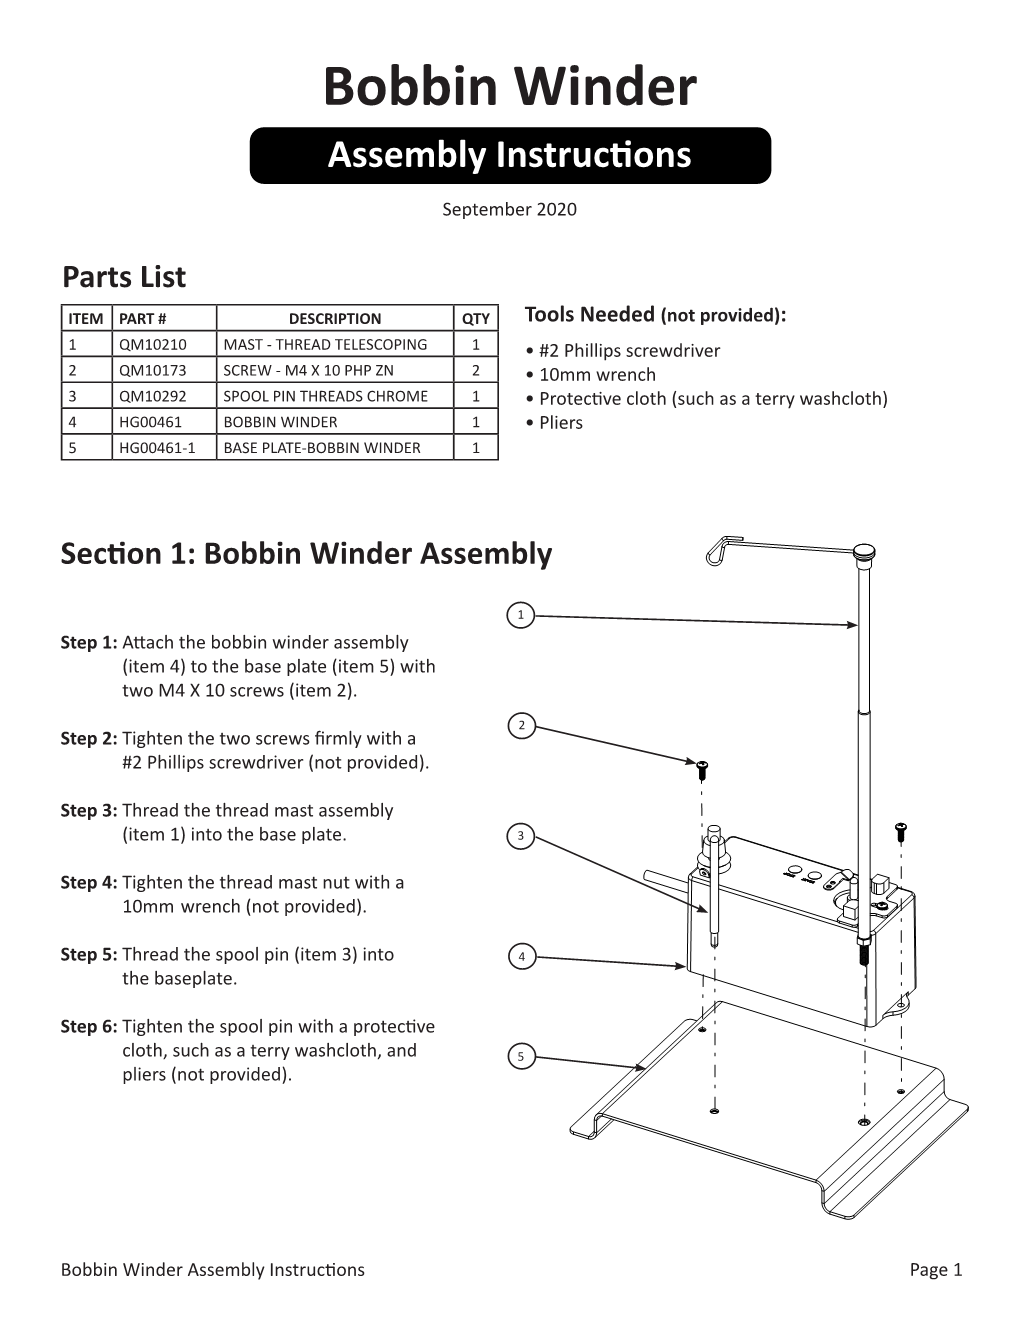 Bobbin Winder Assembly Instructions